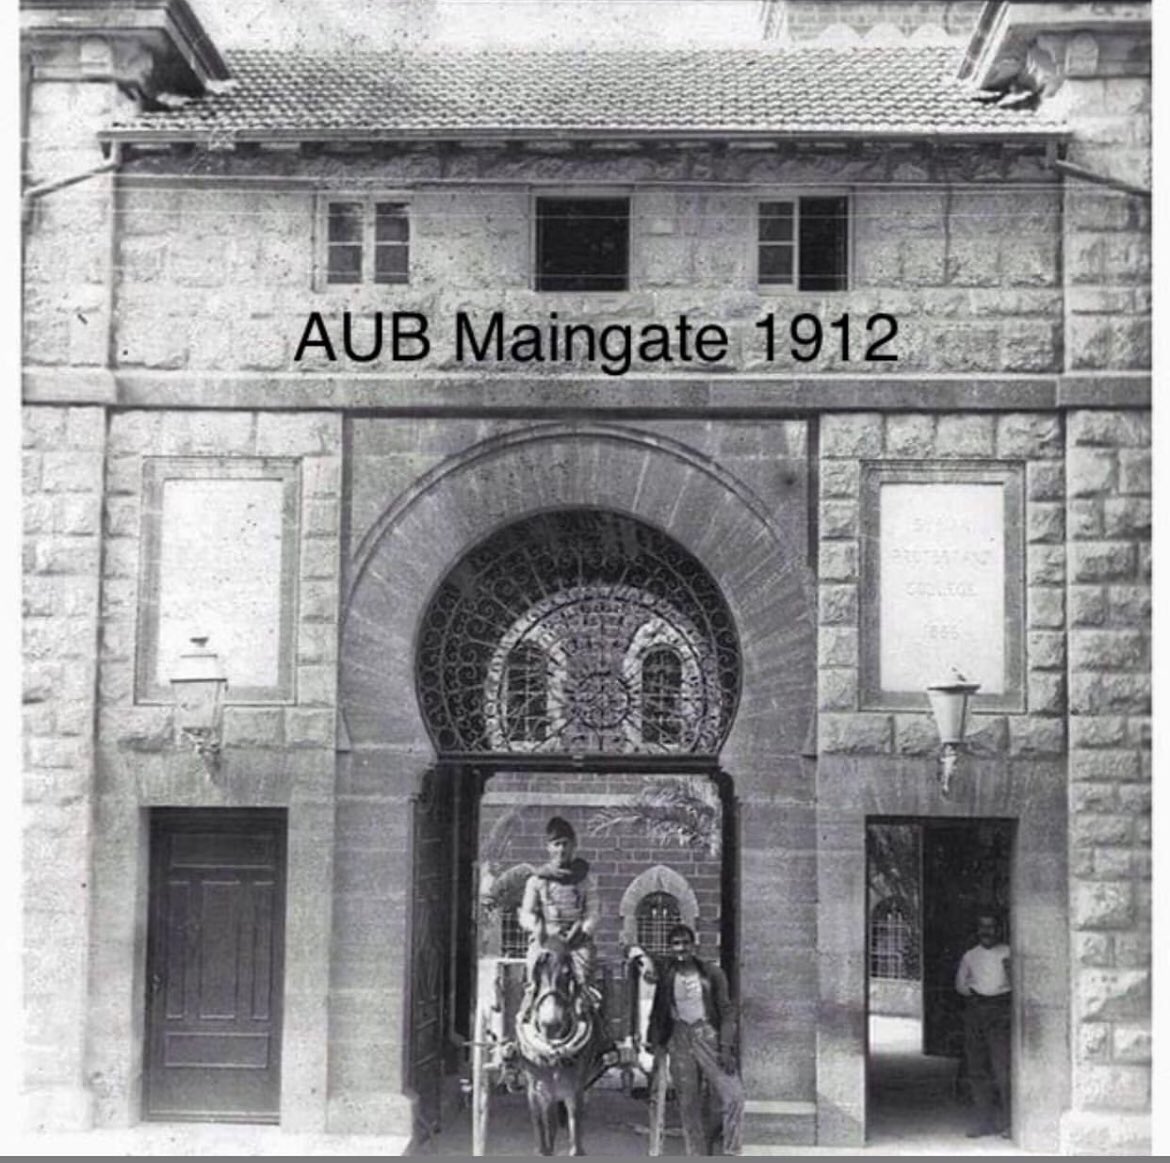 American University of Beirut Maingate 1912